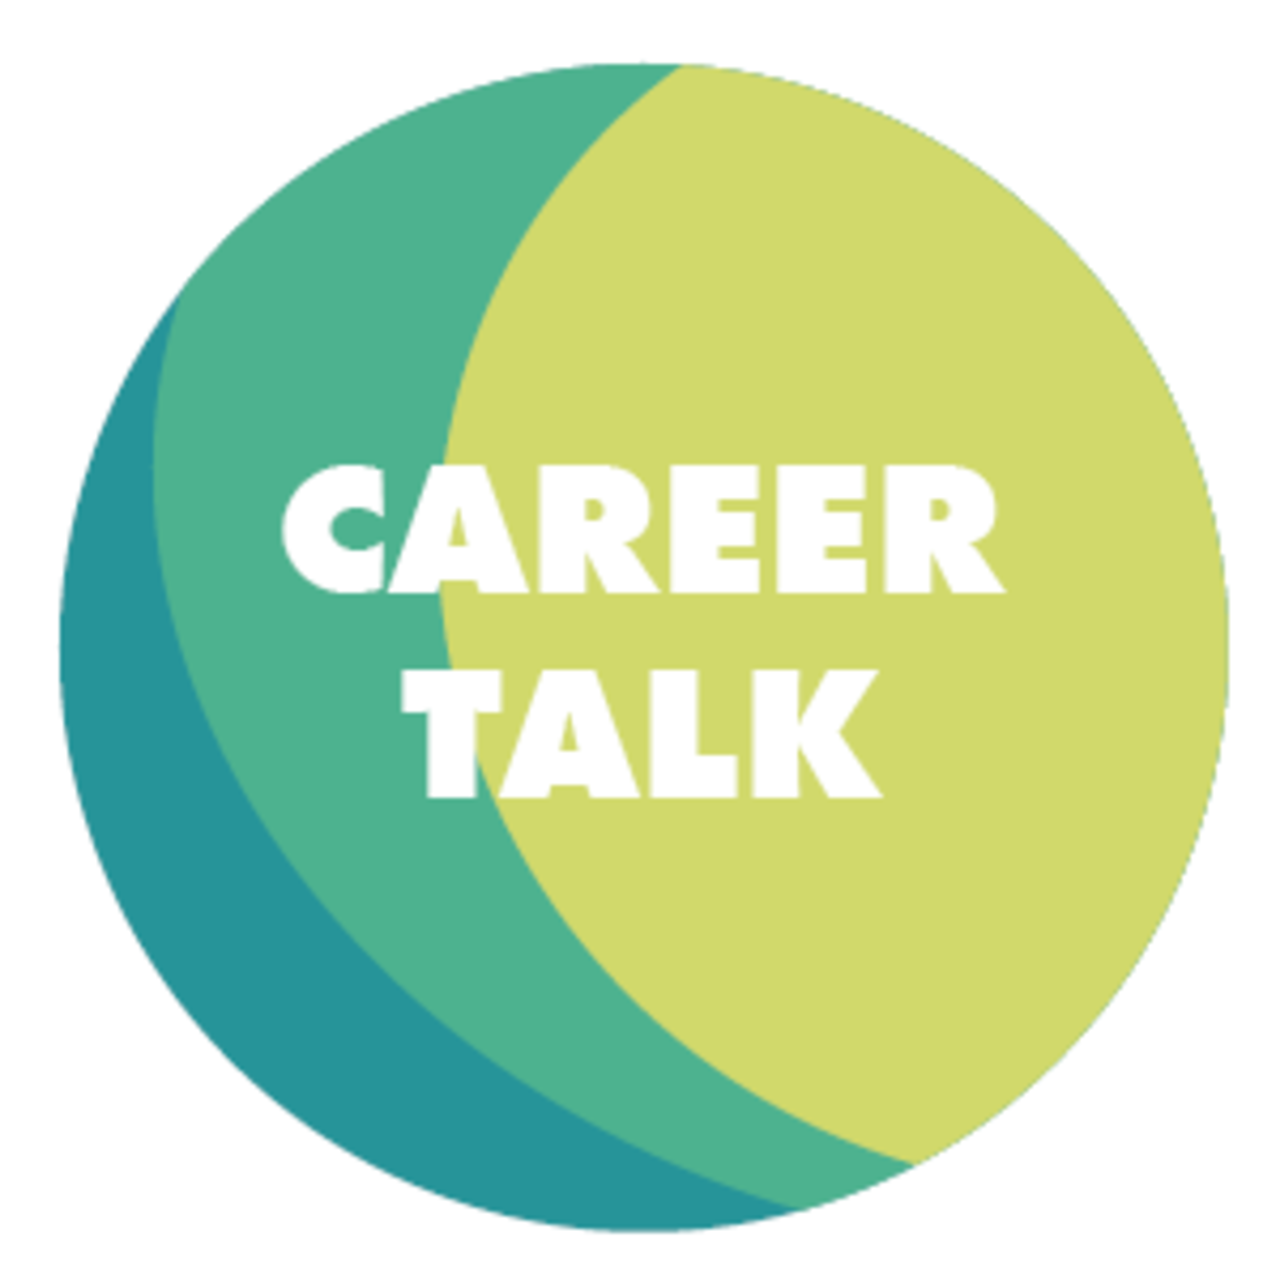 Designelement "Career Talk"